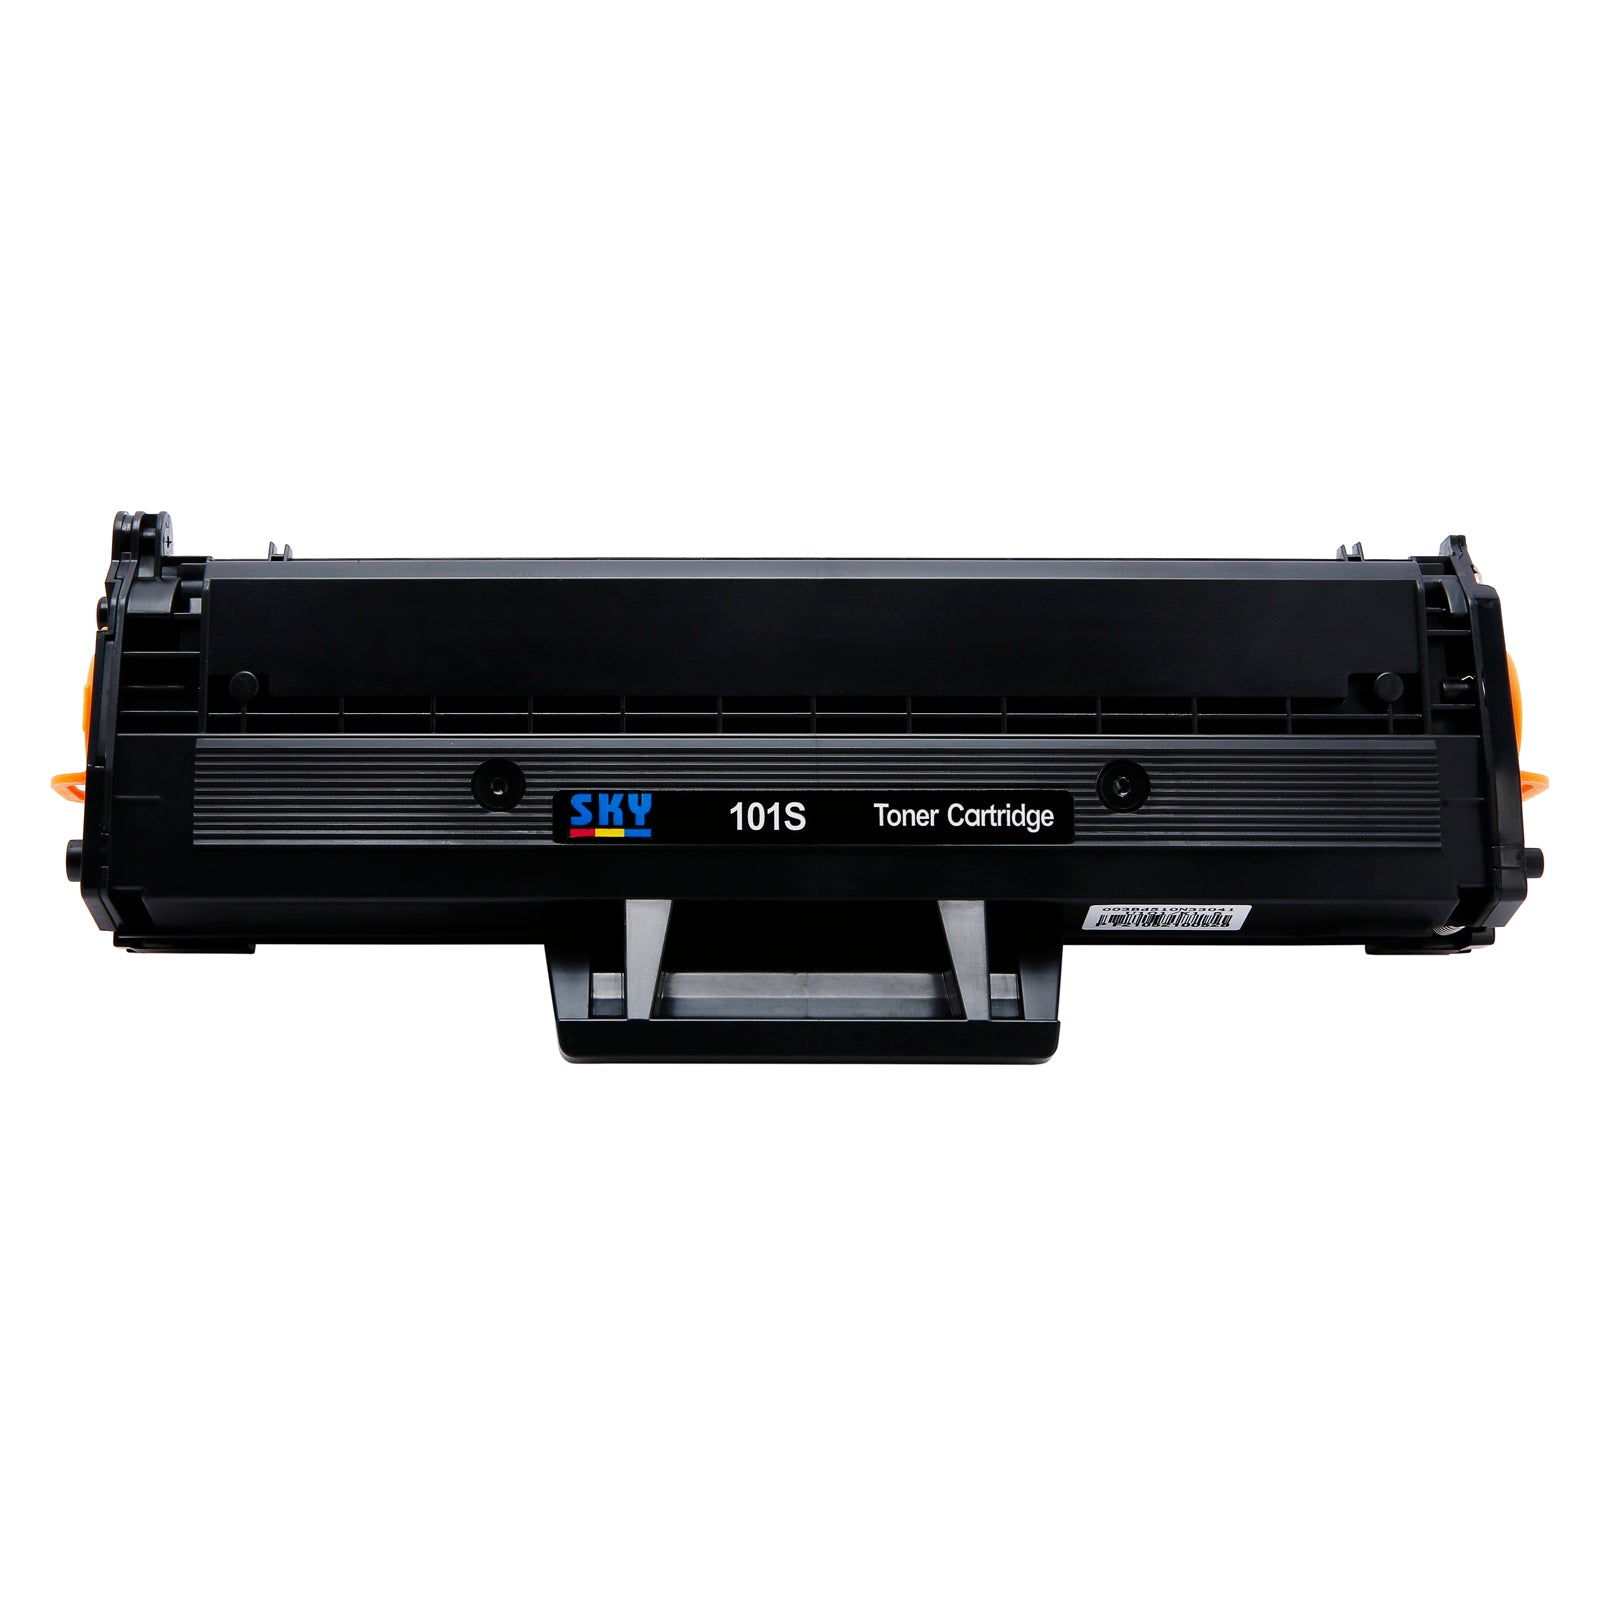 SKY  101 Compatible Toner Cartridge MLT-D101S for Samsung SCX-3405